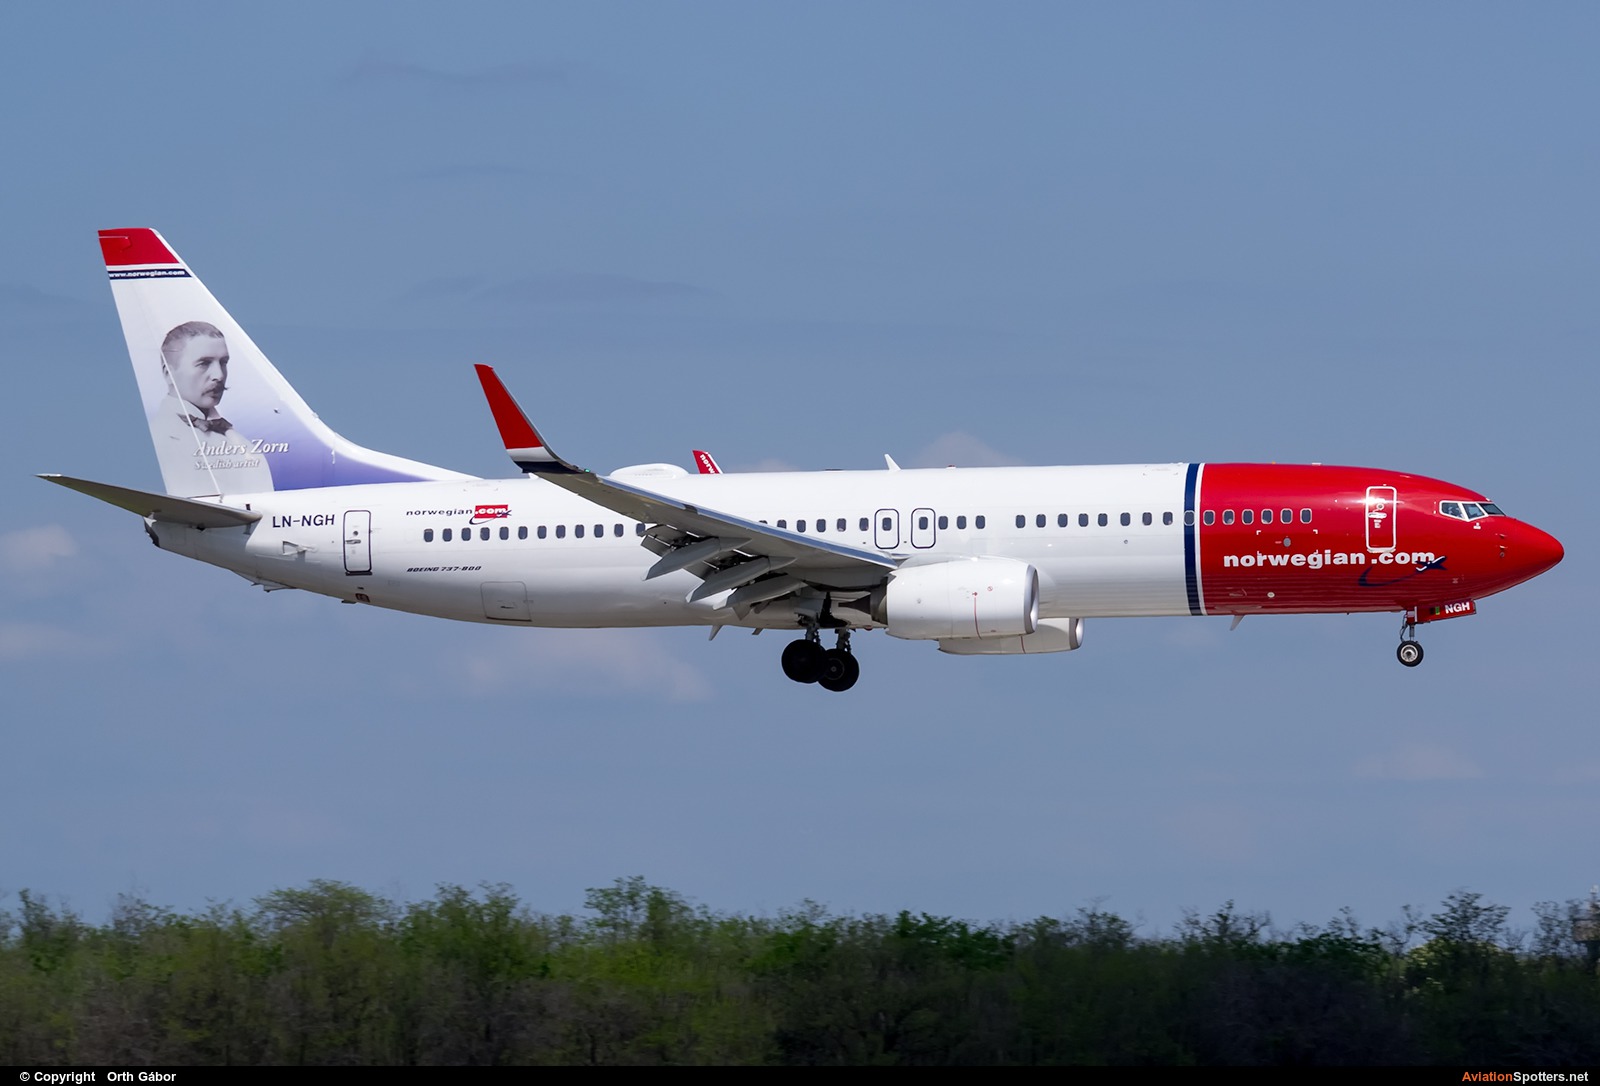 Norwegian Air Shuttle  -  737-800  (LN-NGH) By Orth Gábor (Roodkop)